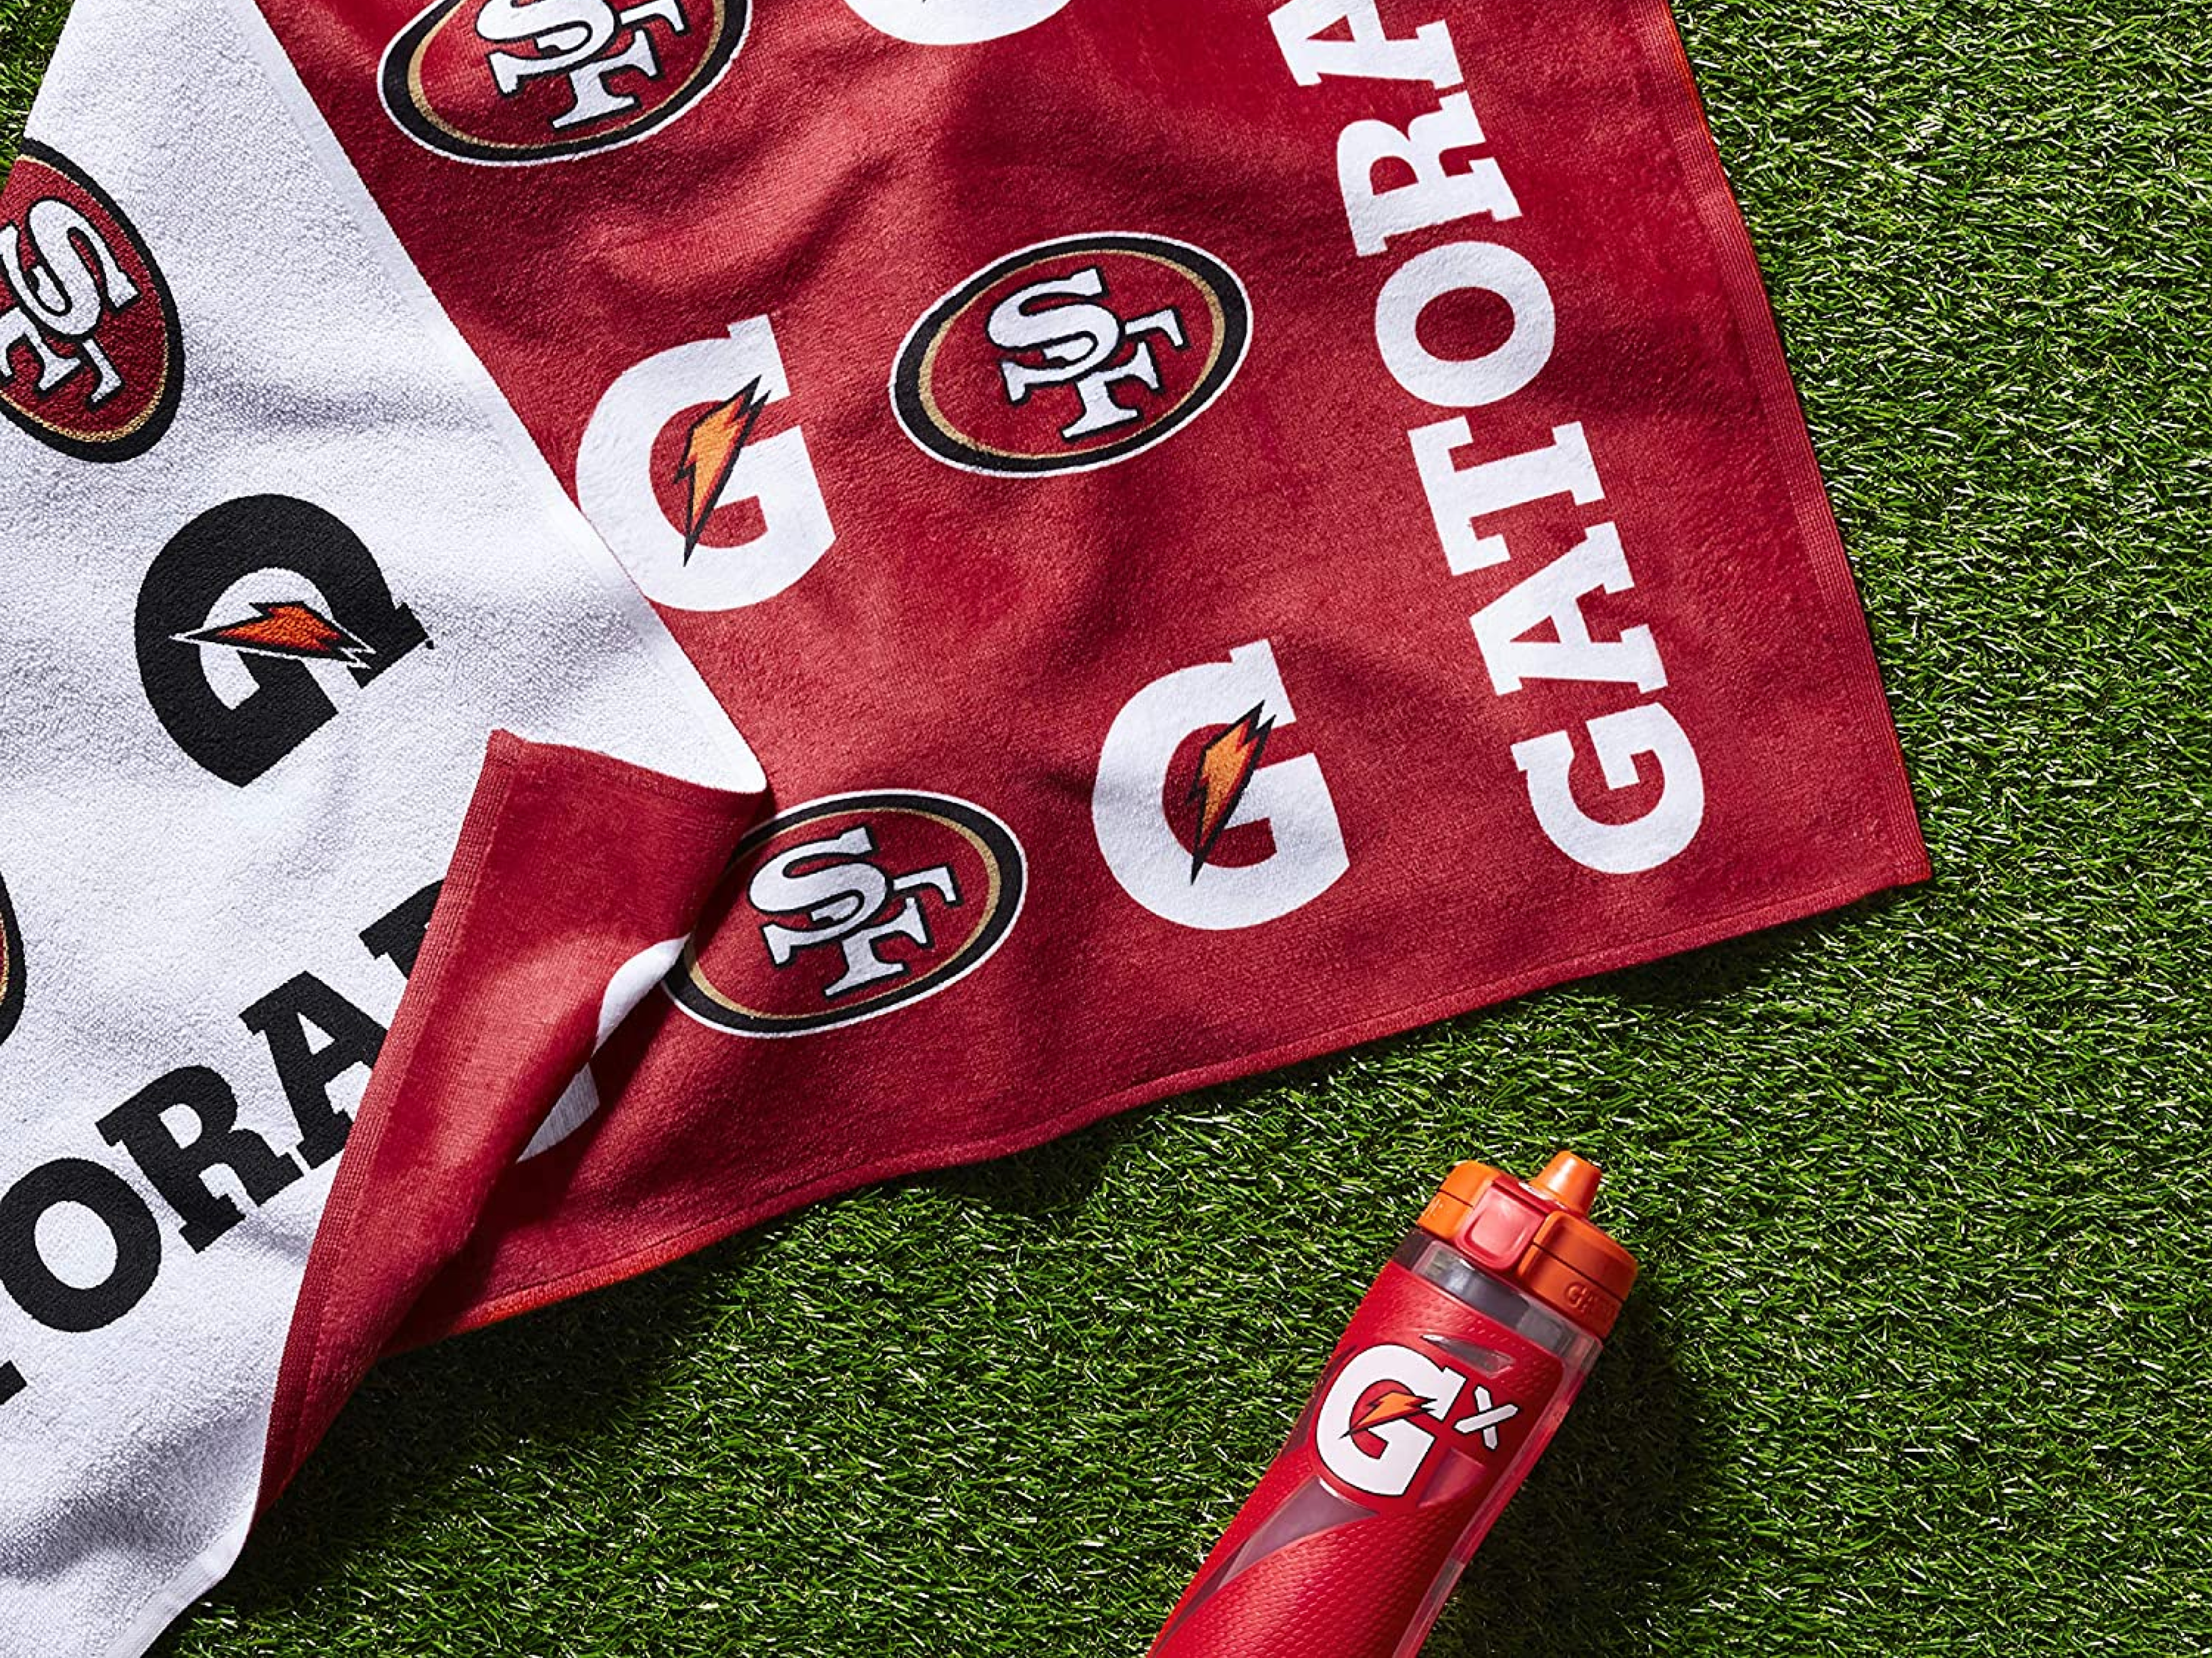 San Francisco 49ers Pro Towel on Turf